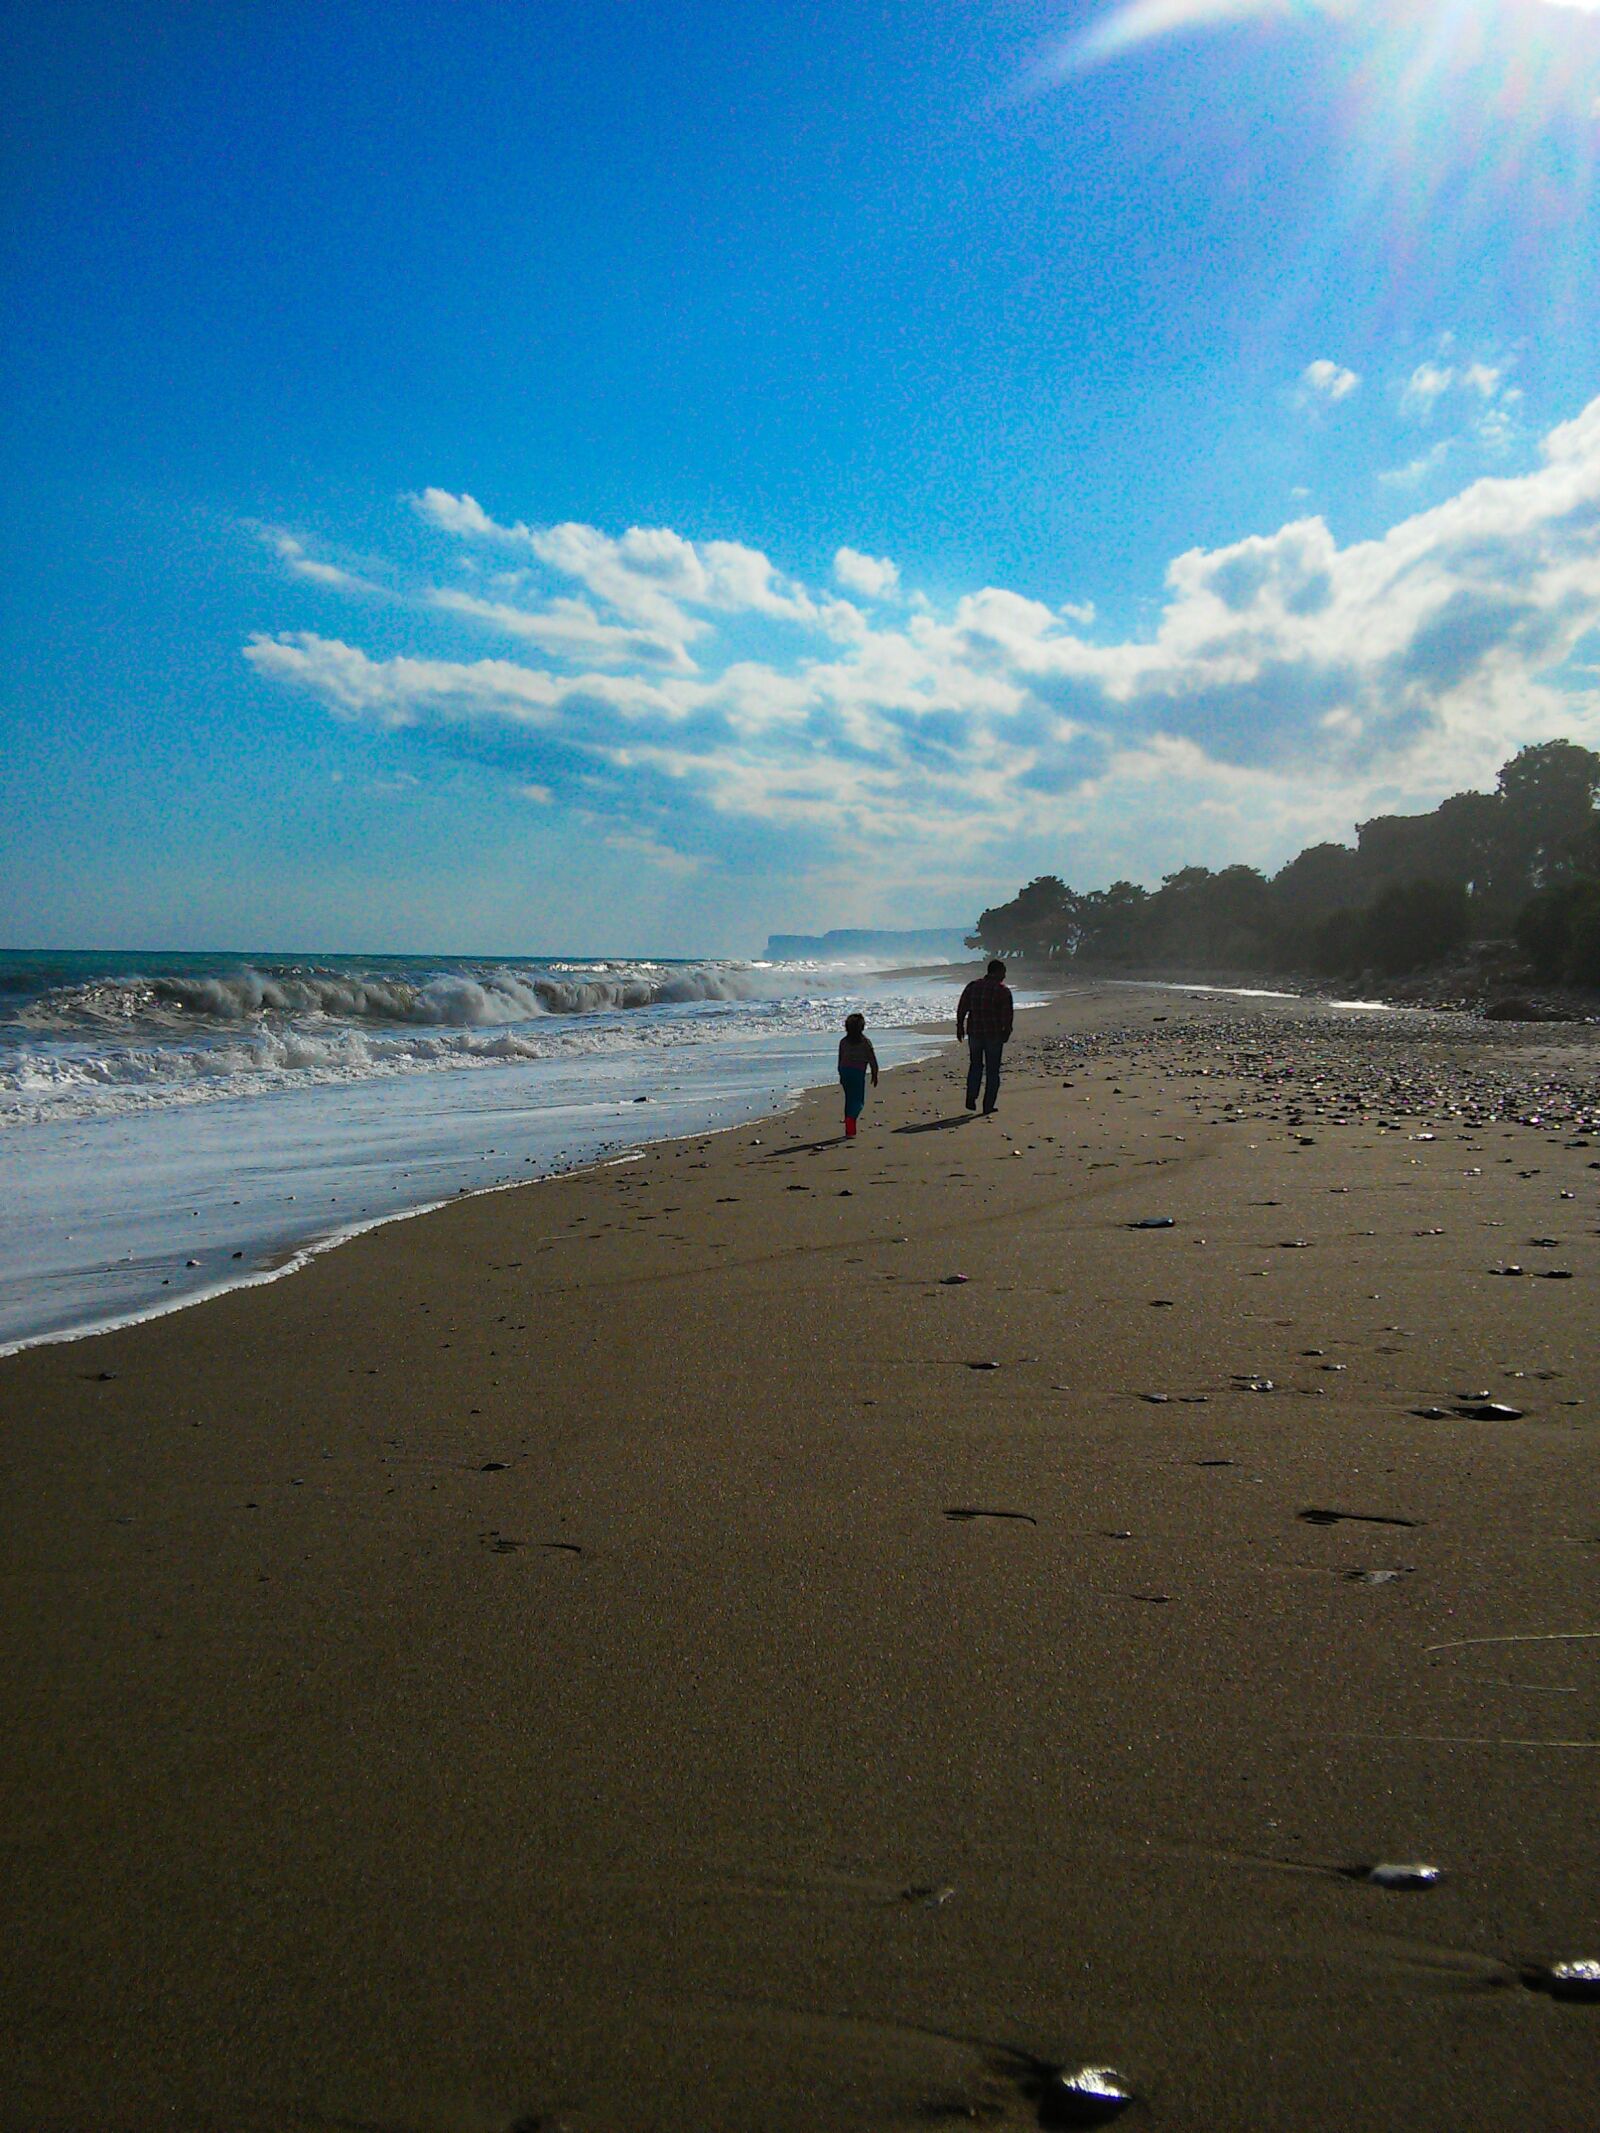 LG G3 S sample photo. Beach, see, marine photography